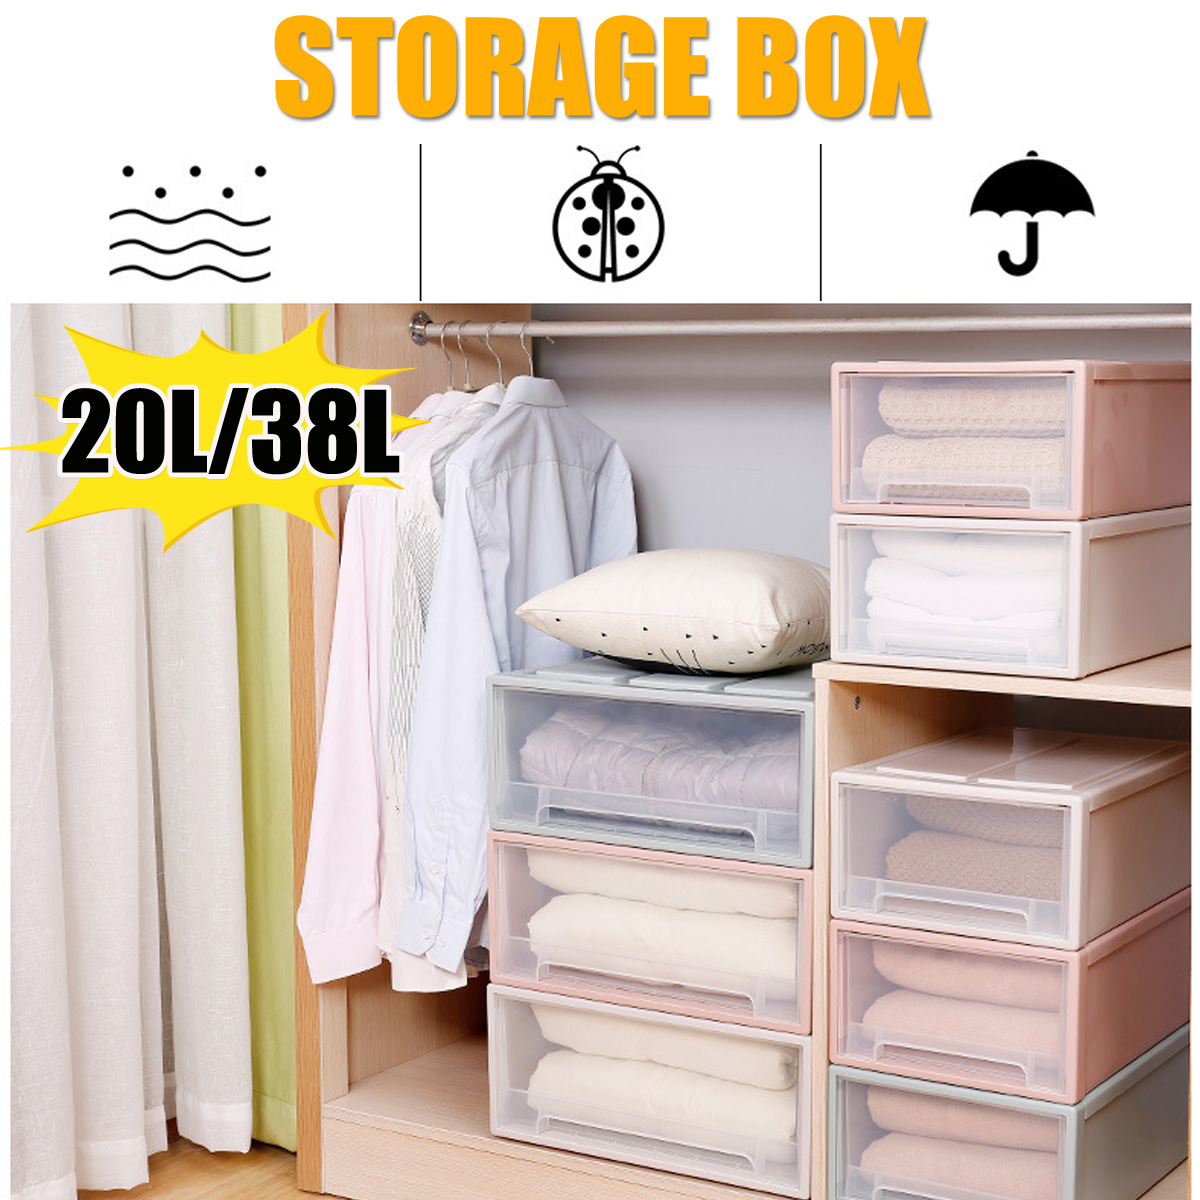 20L38L-Plastic-Storage-Box-Clothes-Bead-Organizer-Parts-Container-1461271-1